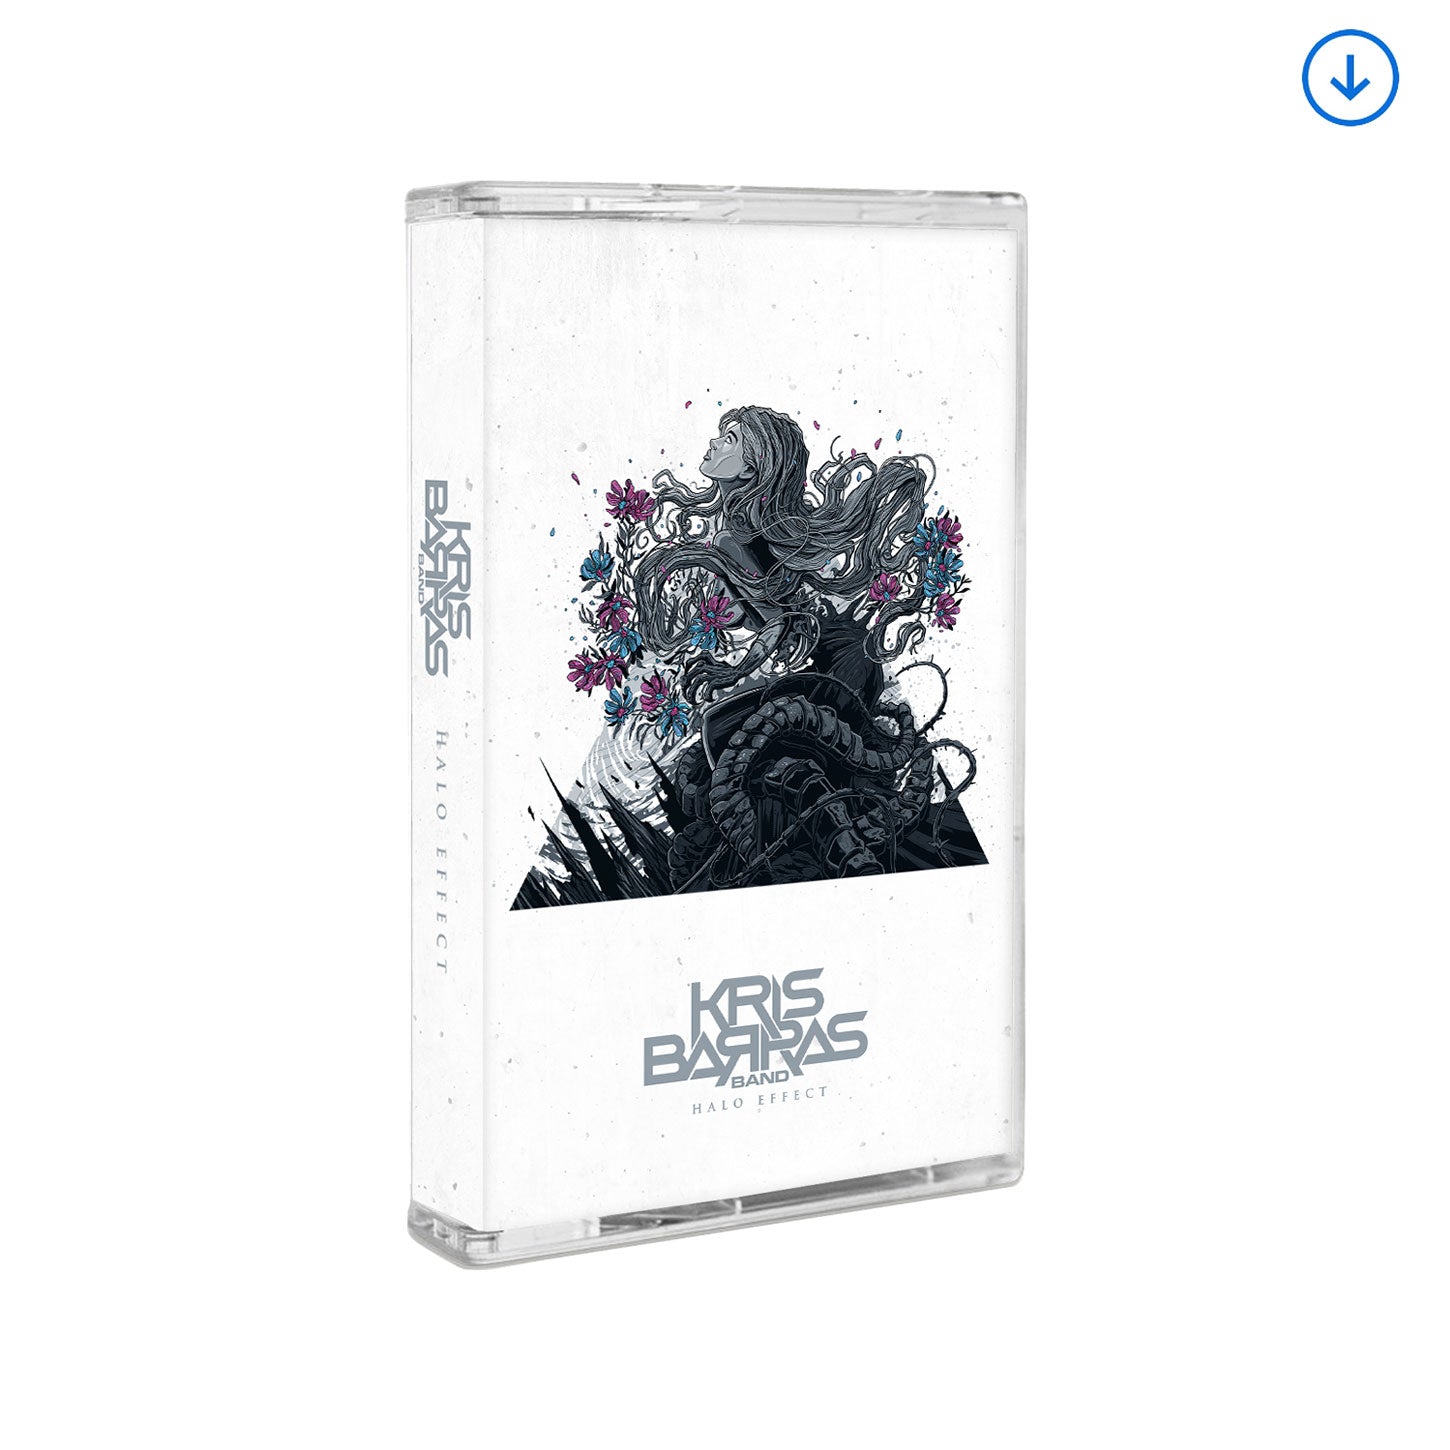 Kris Barras Band "Halo Effect" Cassette Tape + Download - PRE-ORDER